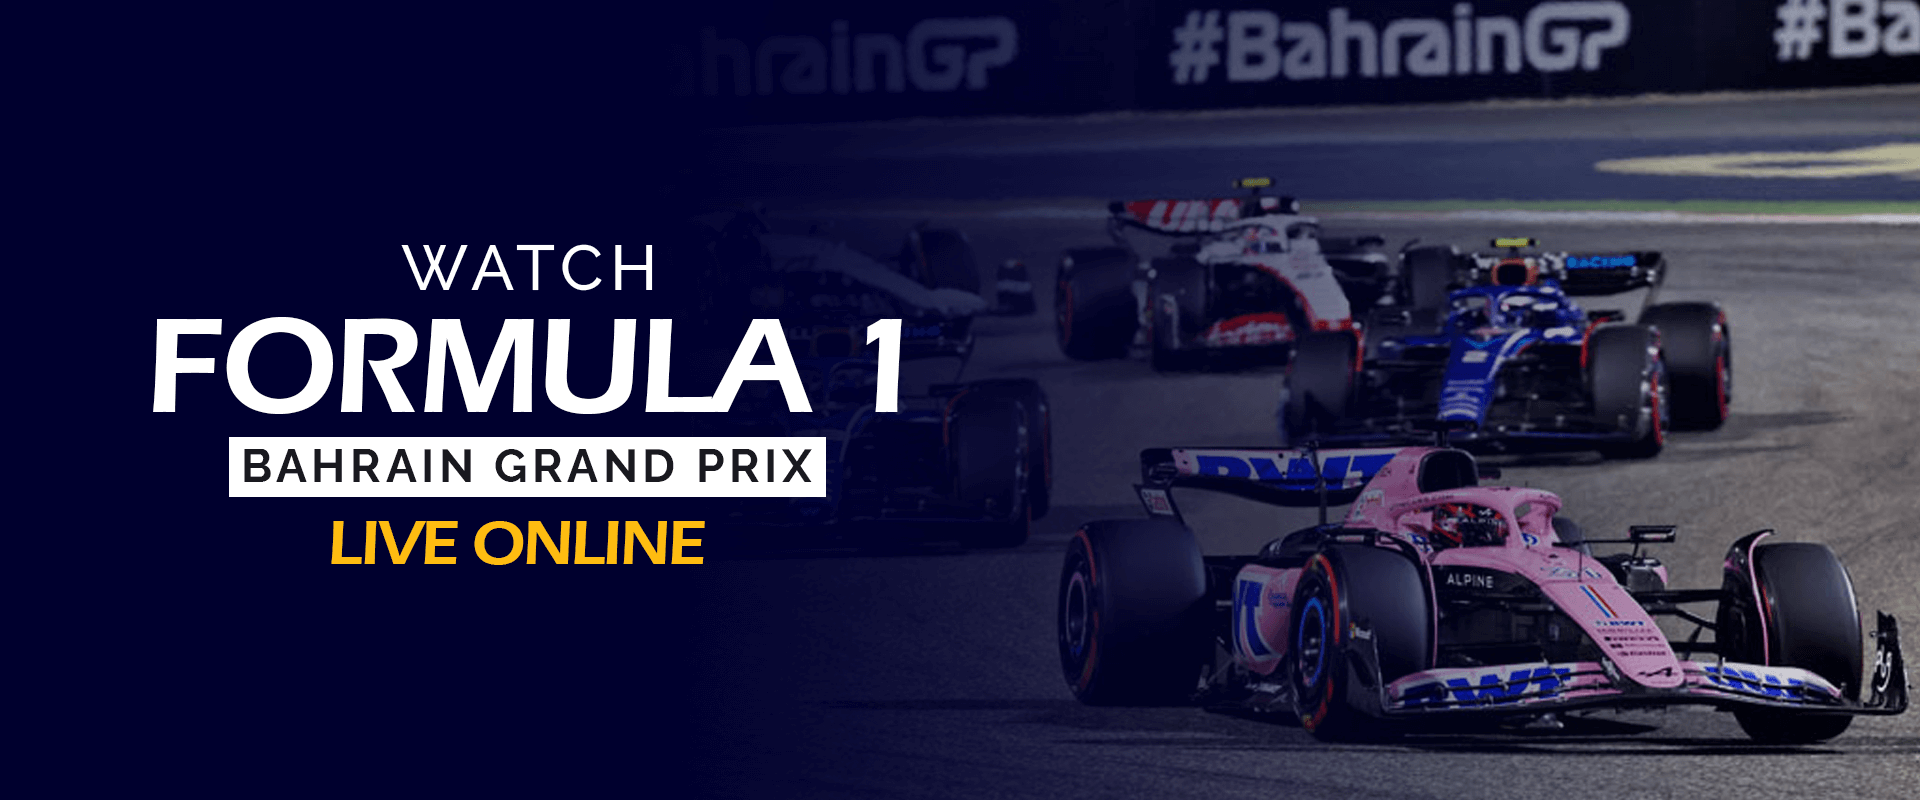 Watch Formula 1 Bahrain Grand Prix Live Online